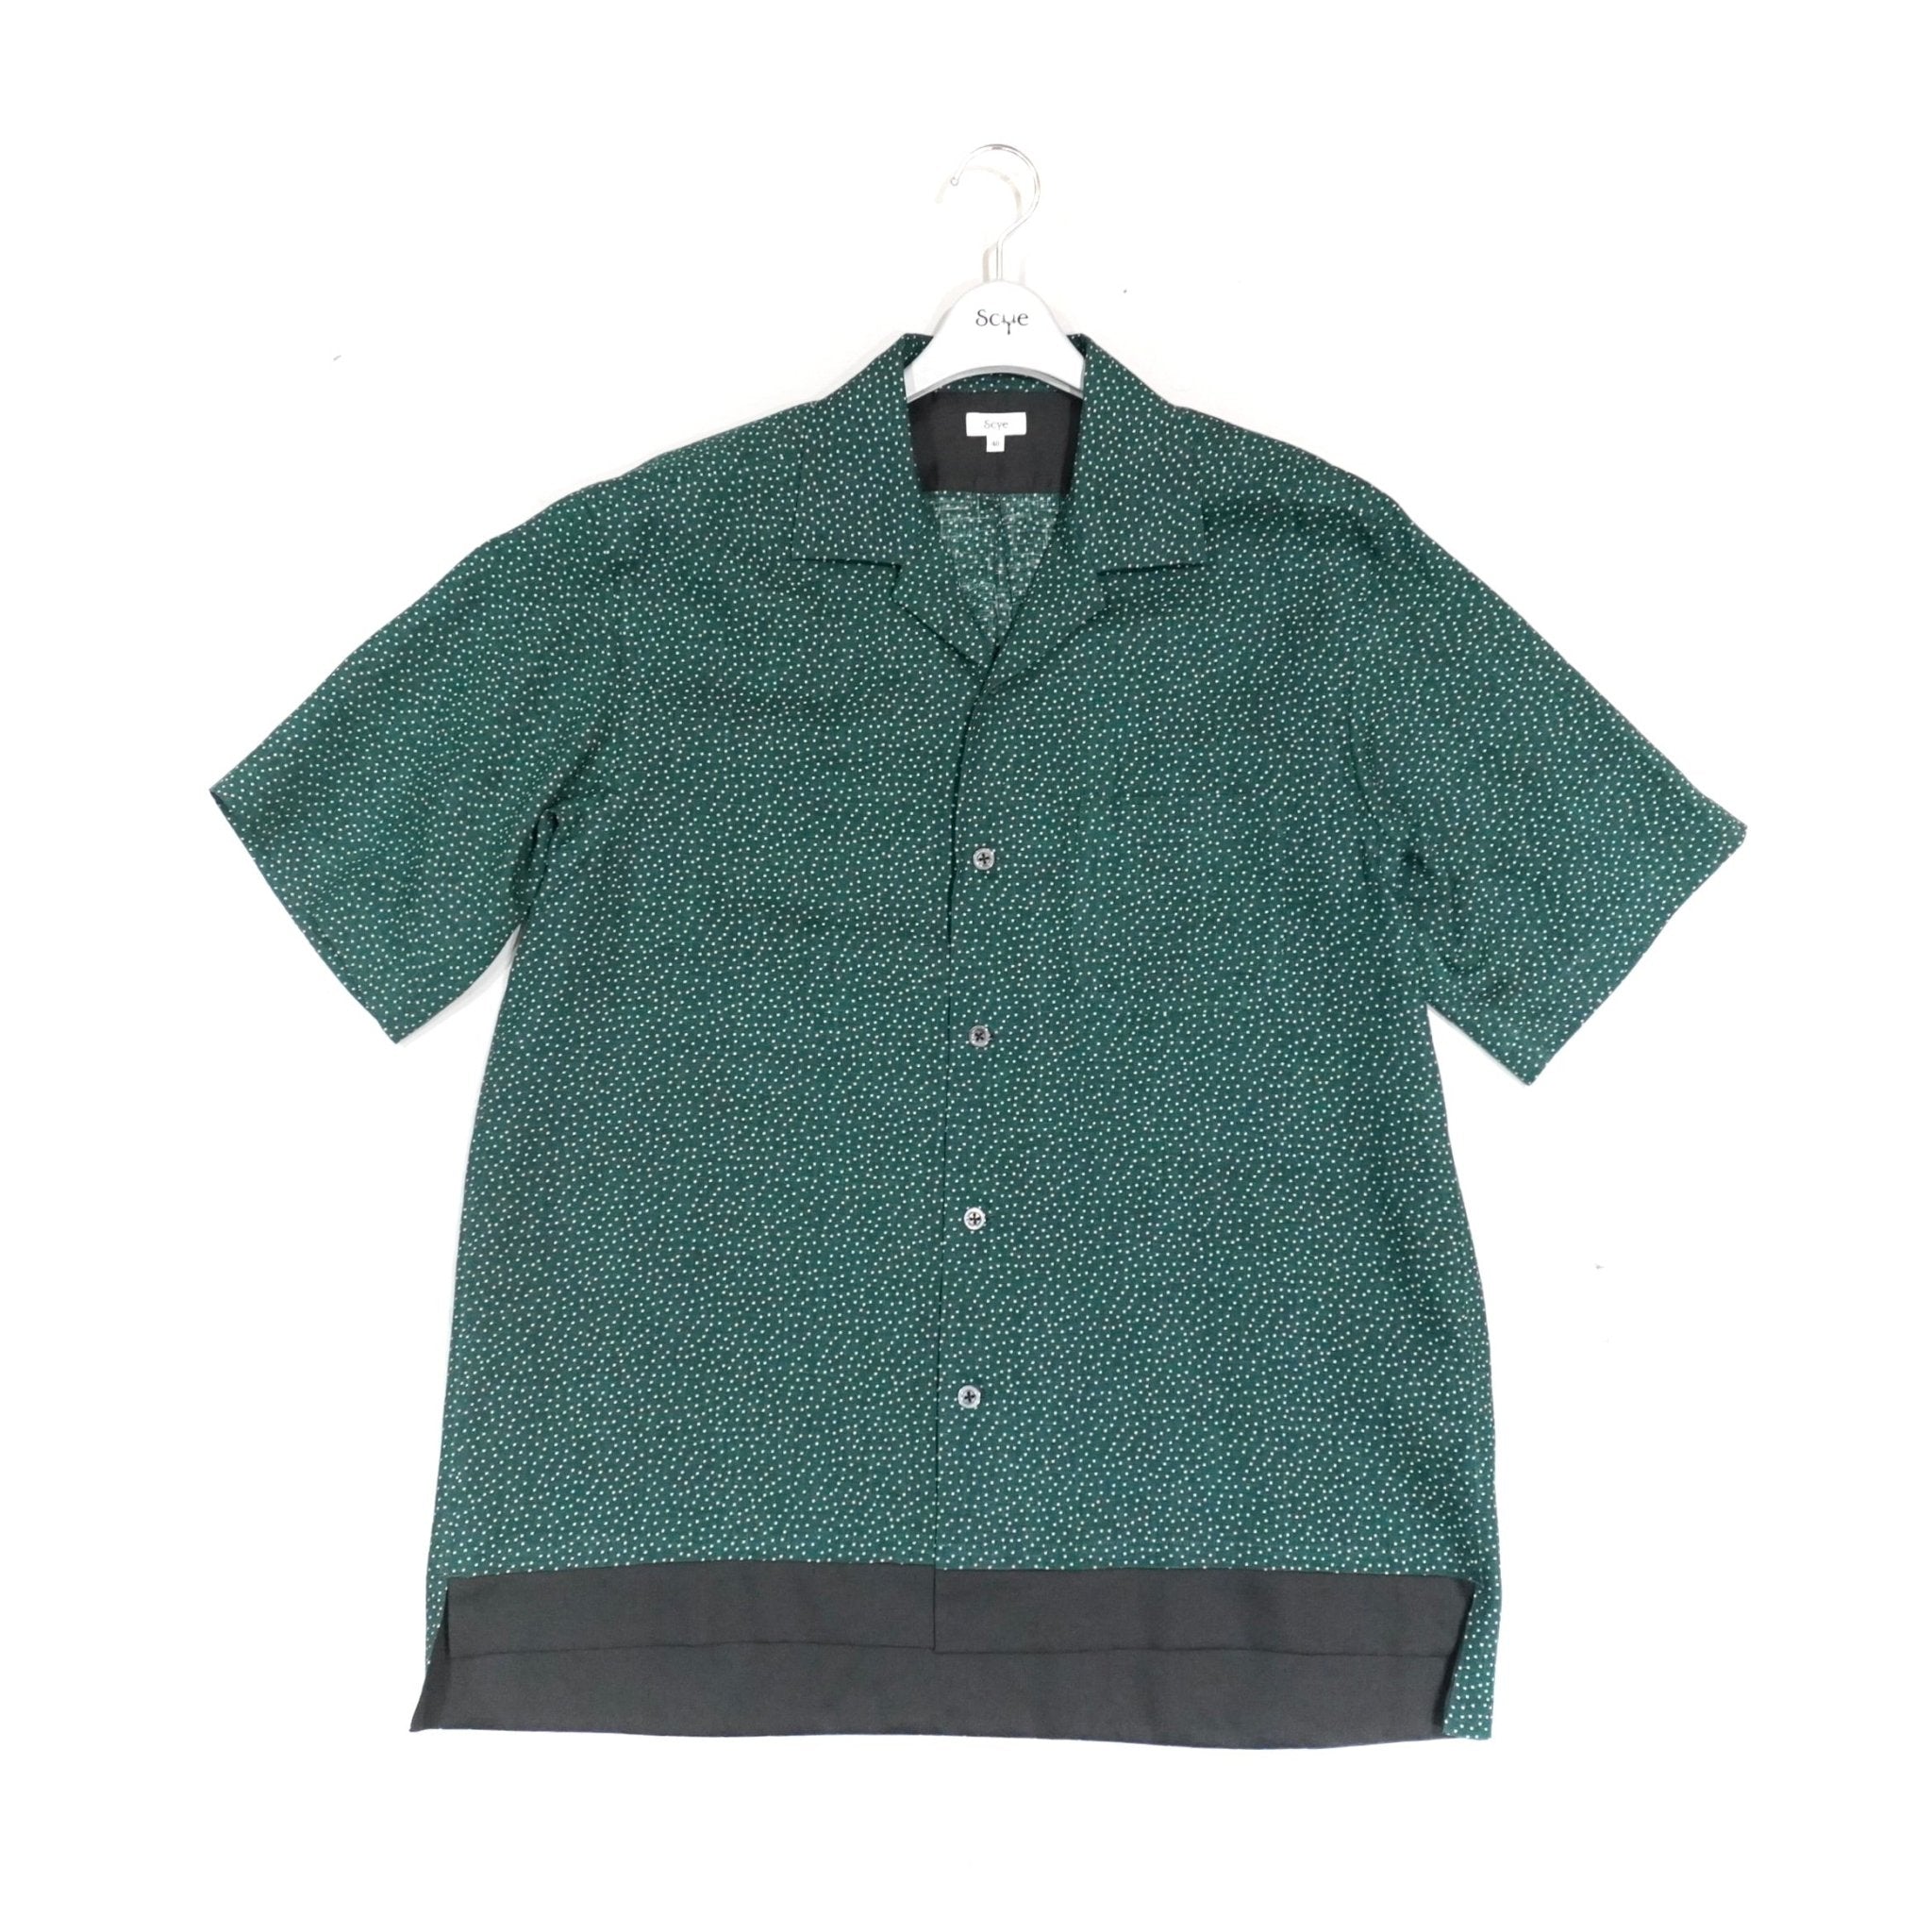 [Scye] Printed Linen Camp Collar Shirt